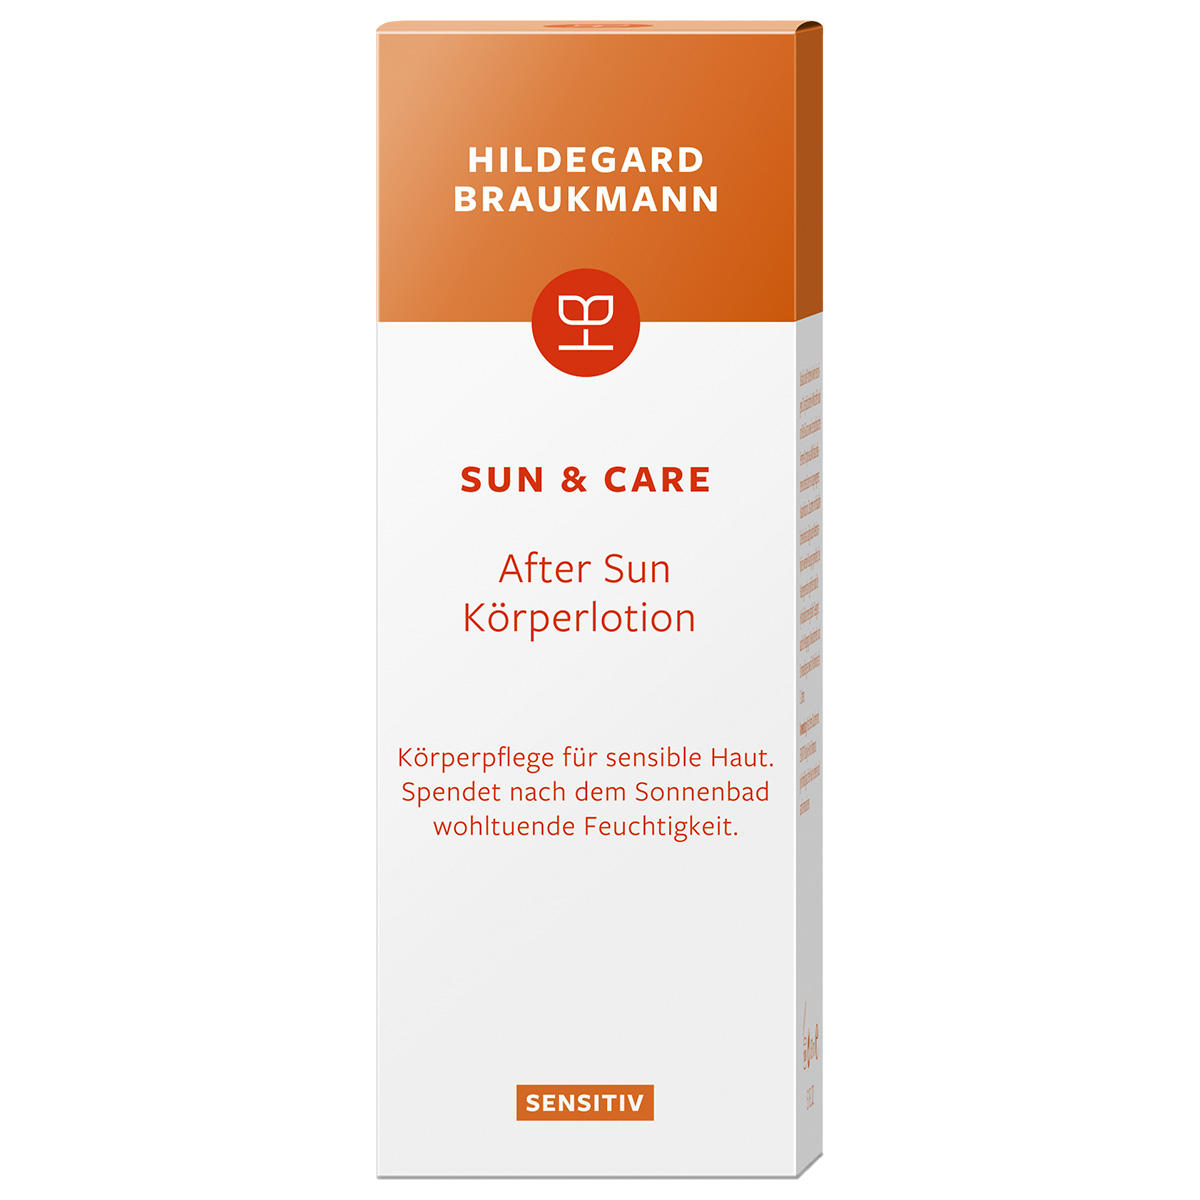 Hildegard Braukmann sun & care Sensitiv After Sun Körperlotion 150 ml - 2